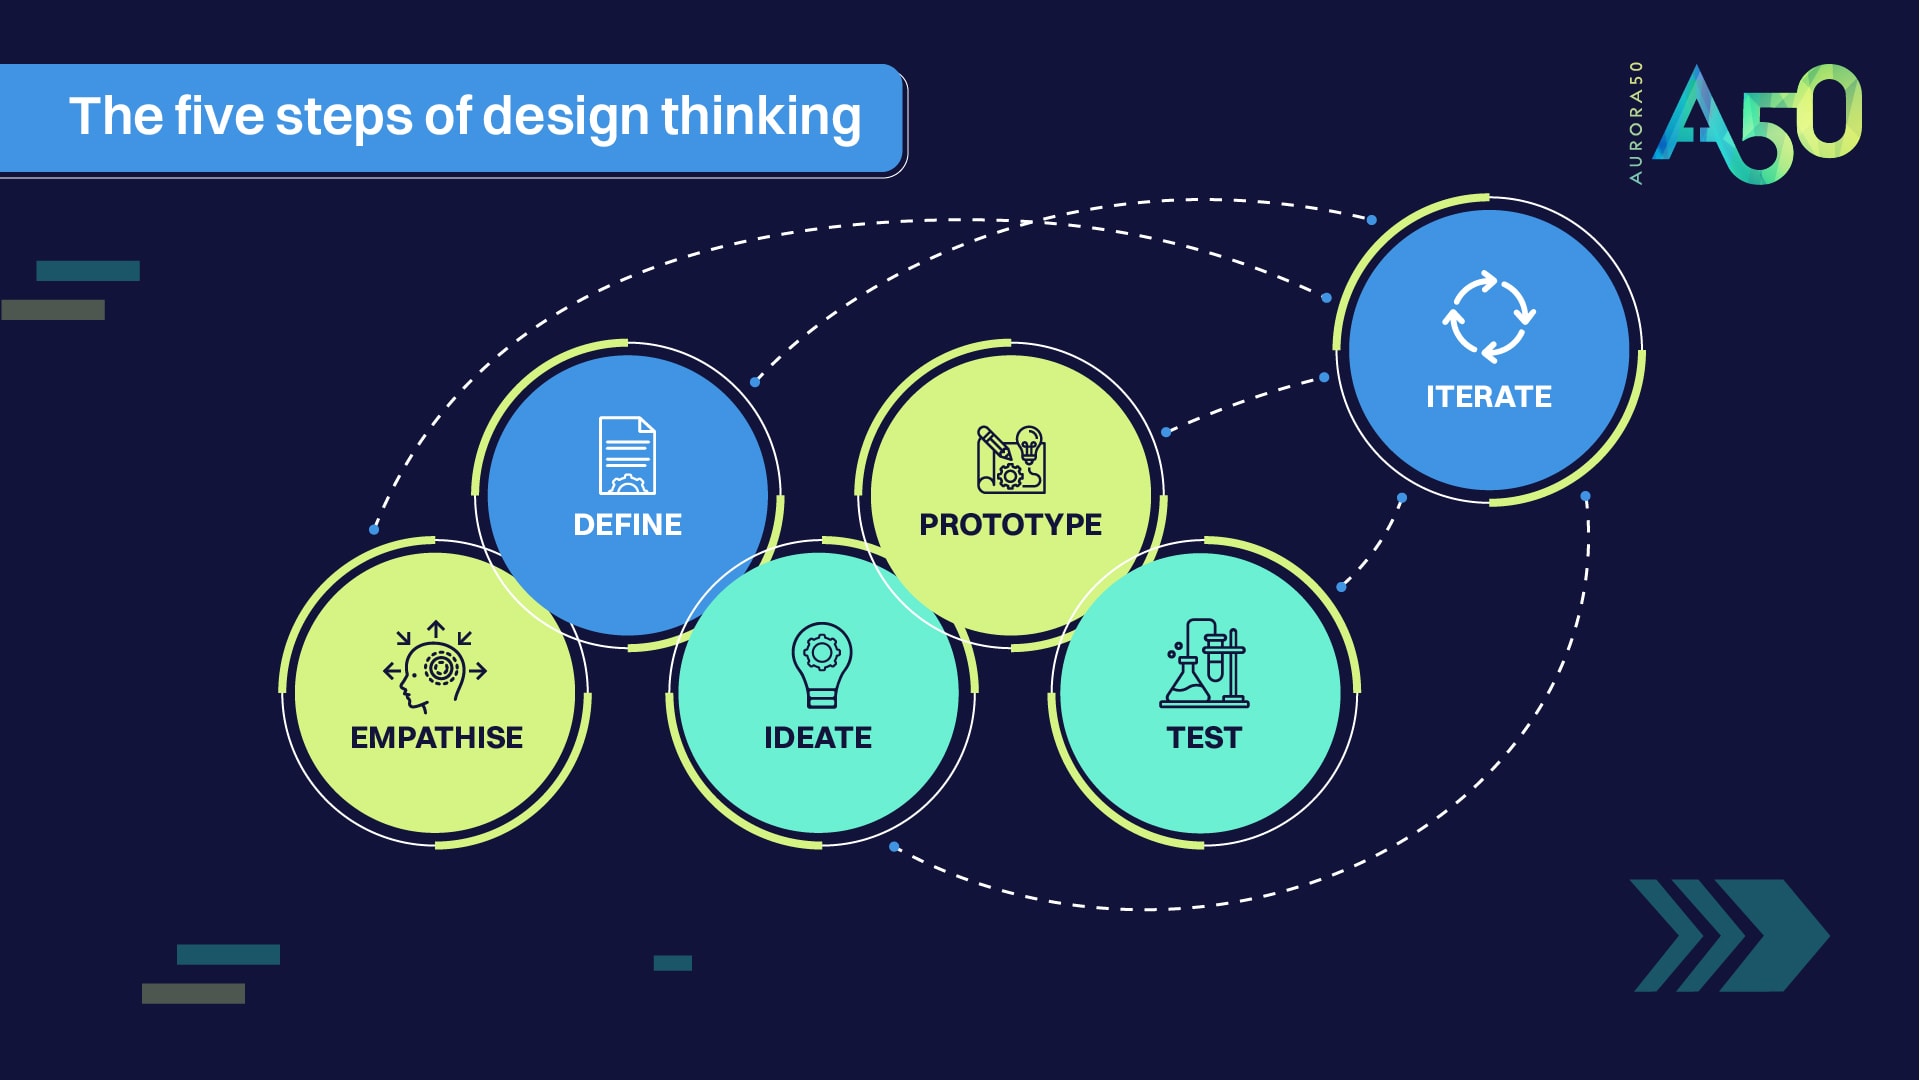 Design thinking five steps graphic|Design thinking growth mindset graphic|Design thinking smaller steps